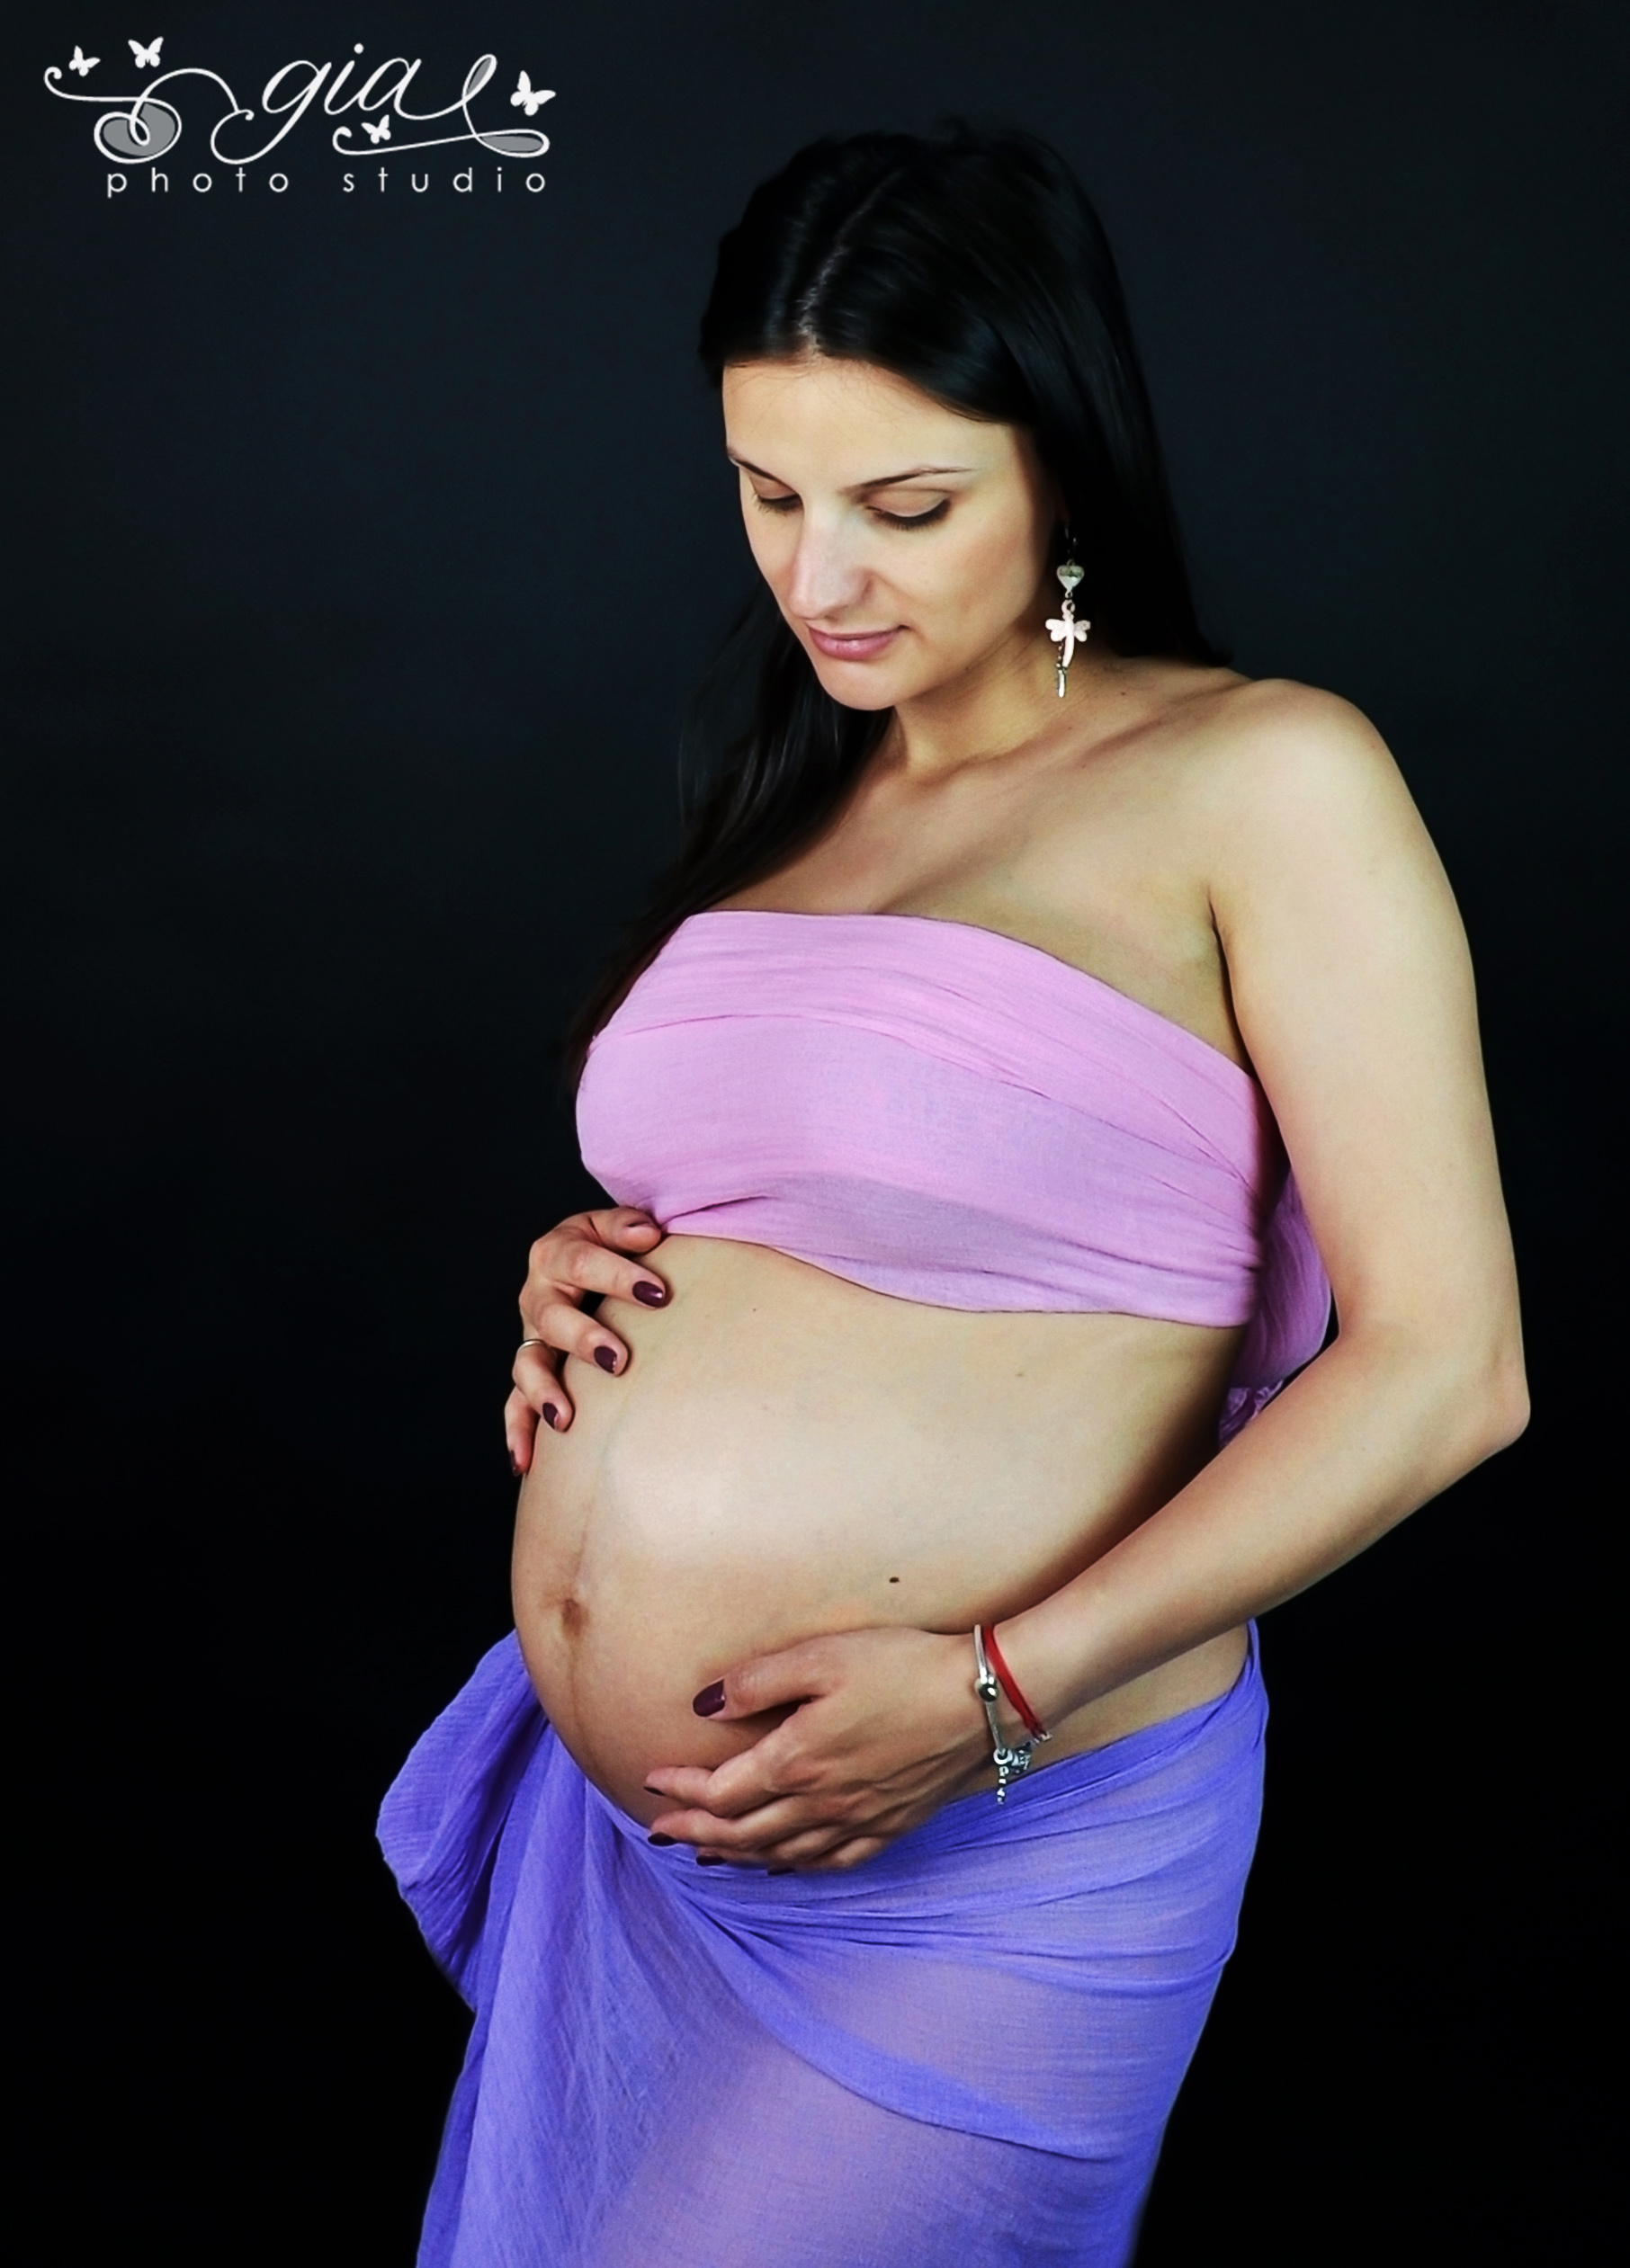 Poze gravide – viitoare mamici 9